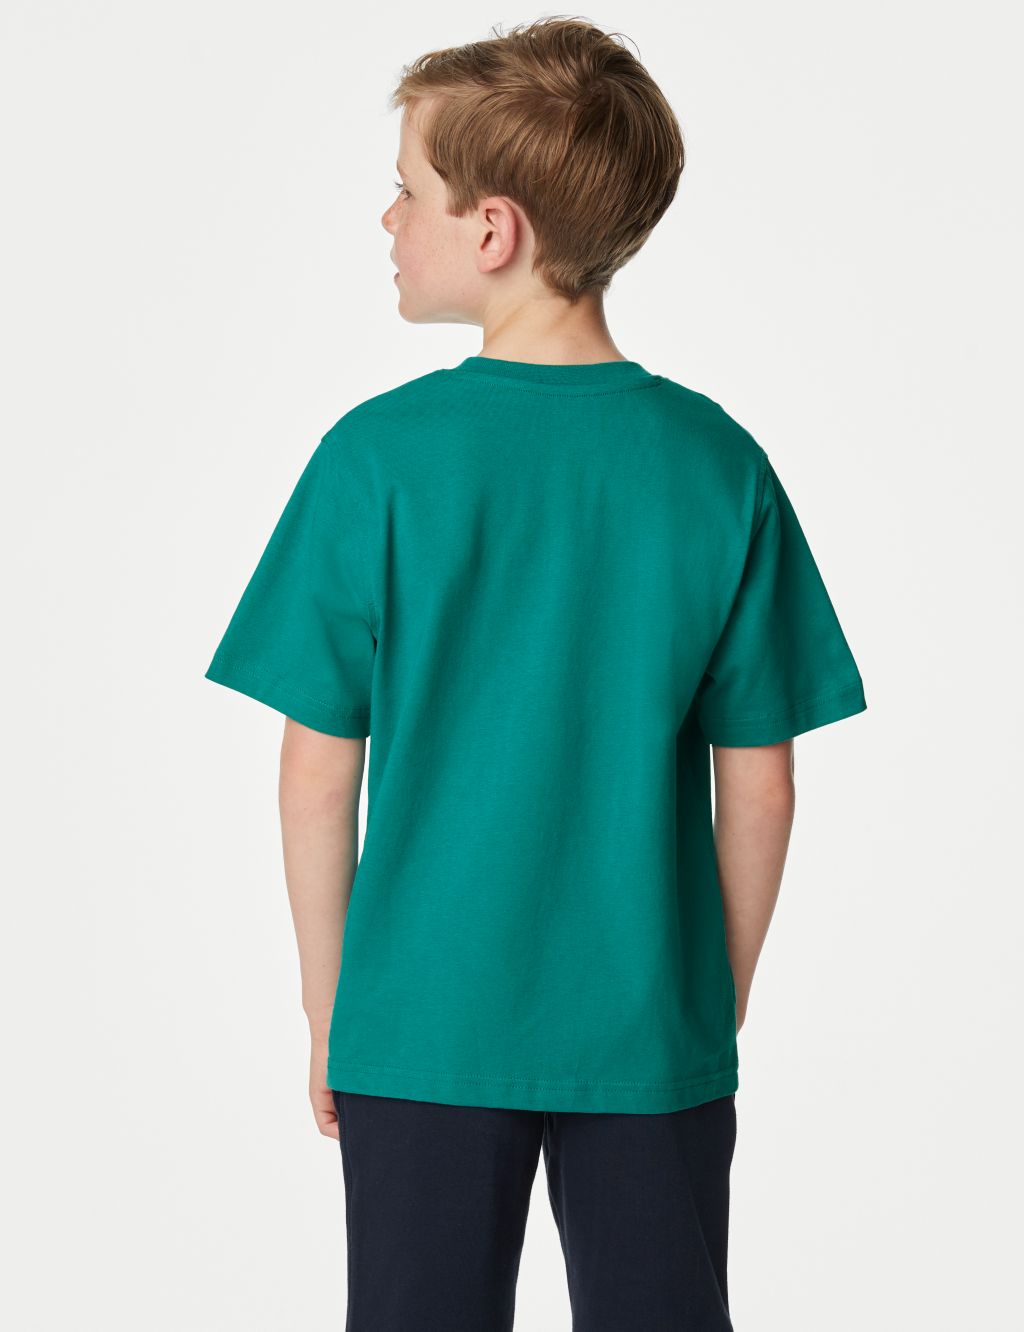 Unisex Pure Cotton T-Shirt (2-16 Yrs) image 4